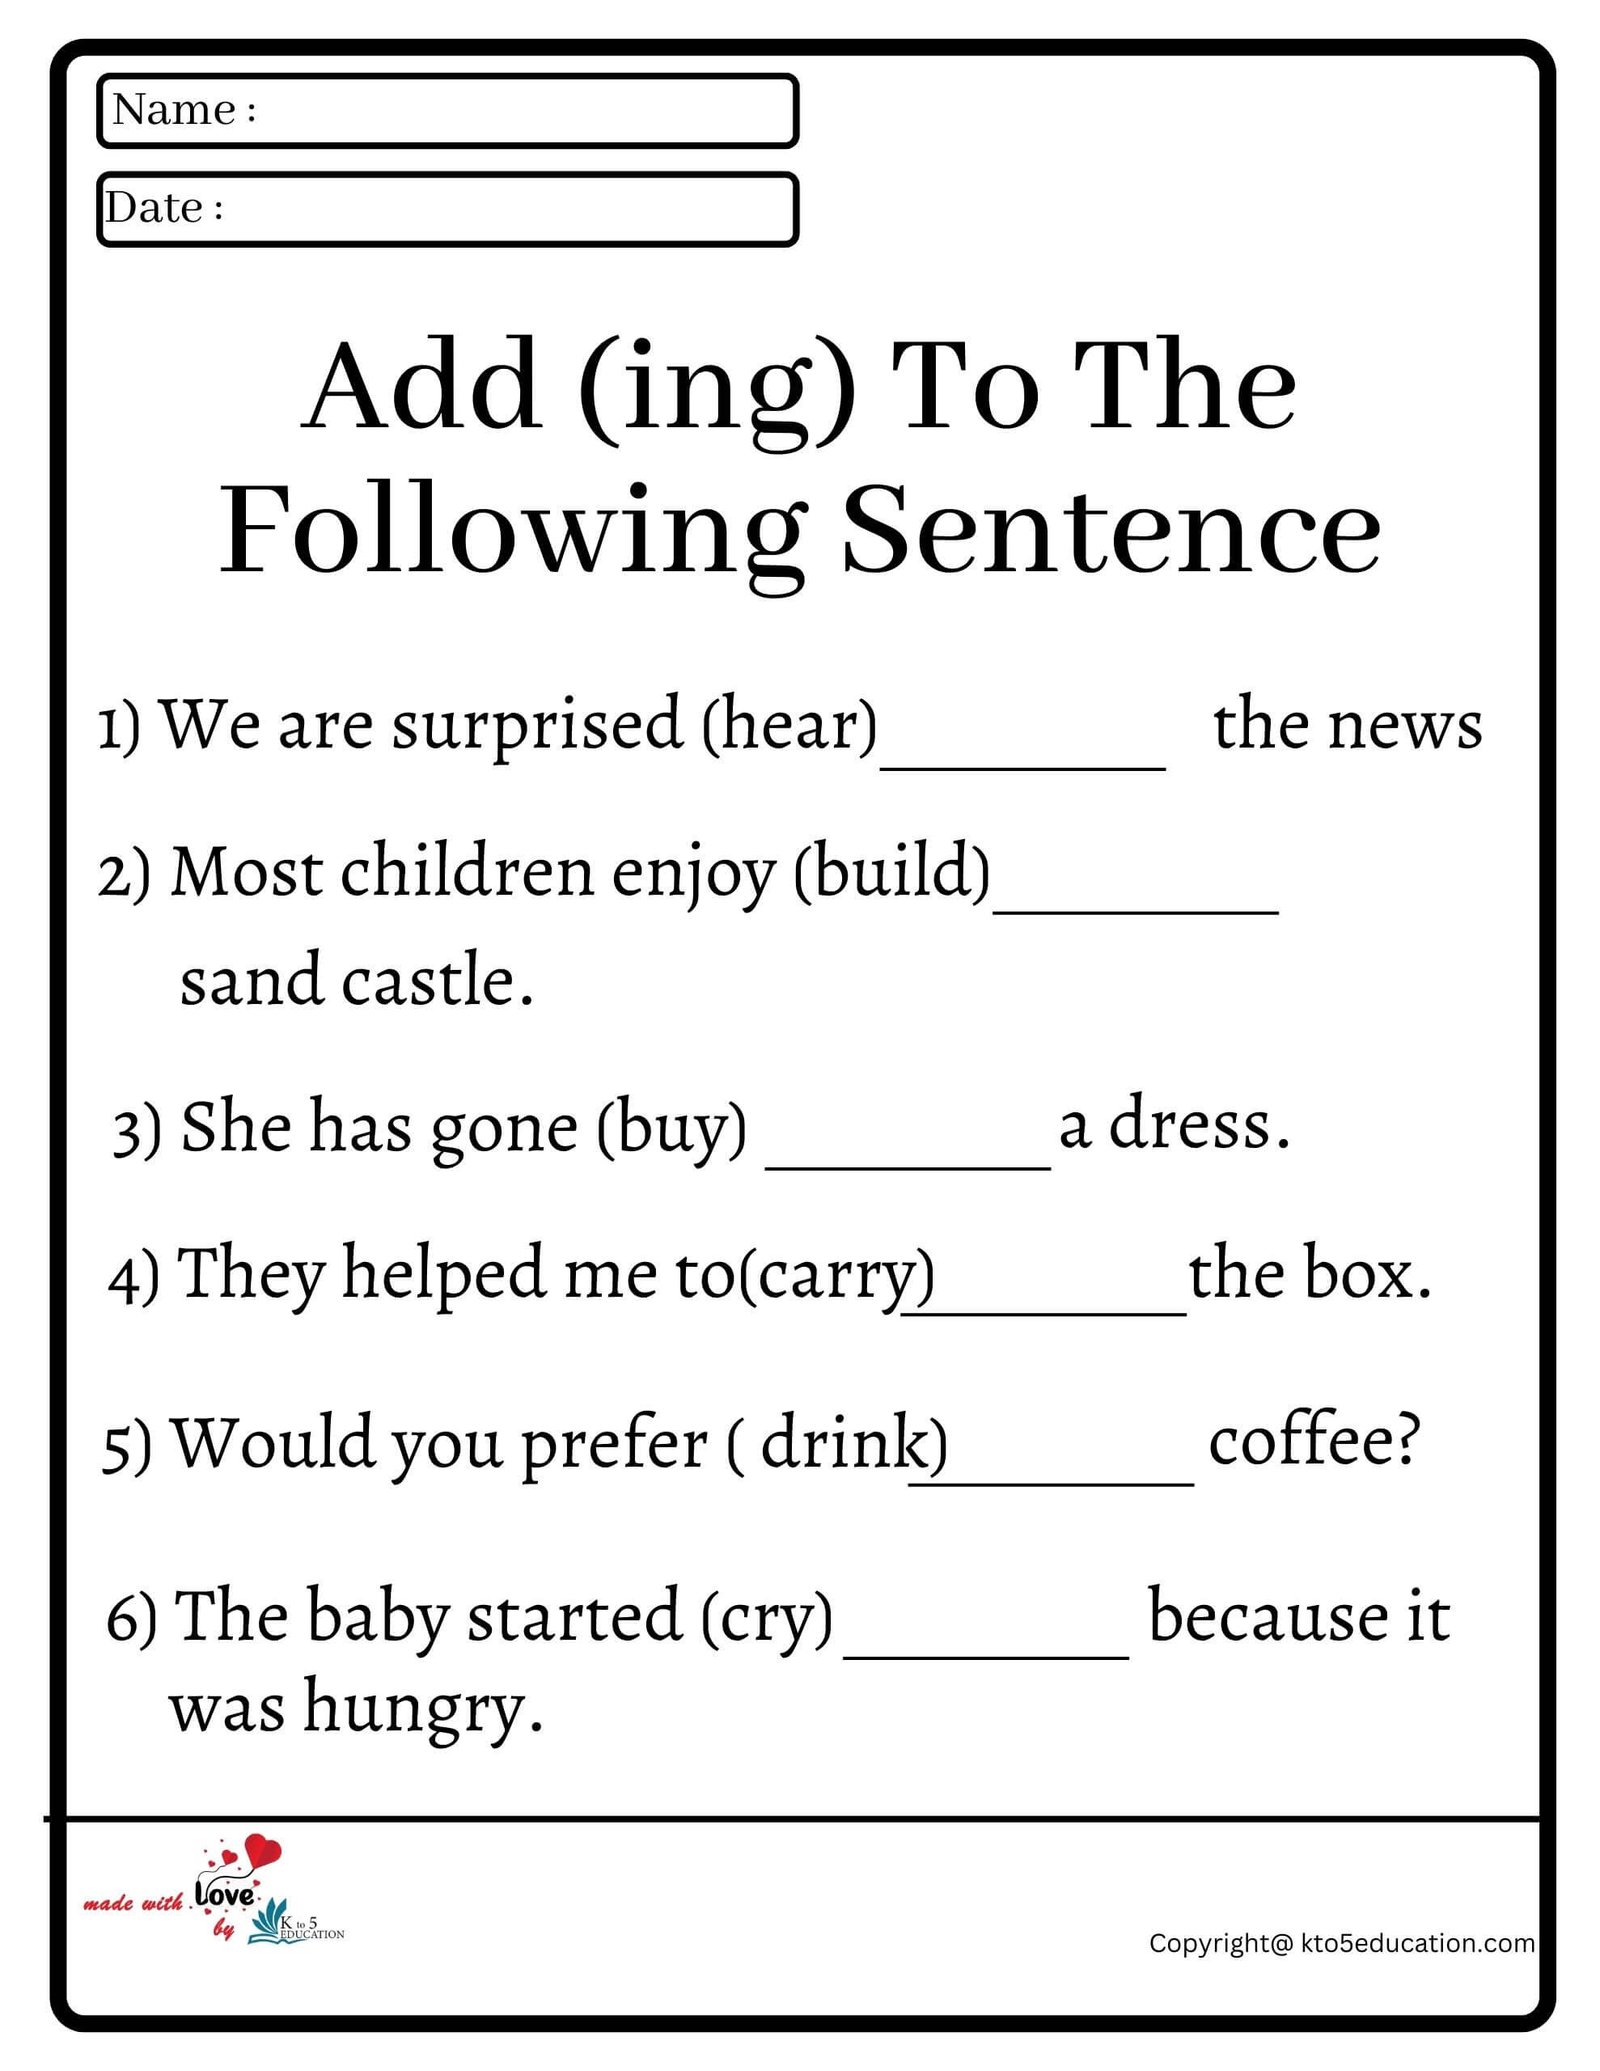 Add (ing) To The Following Sentence Worksheet